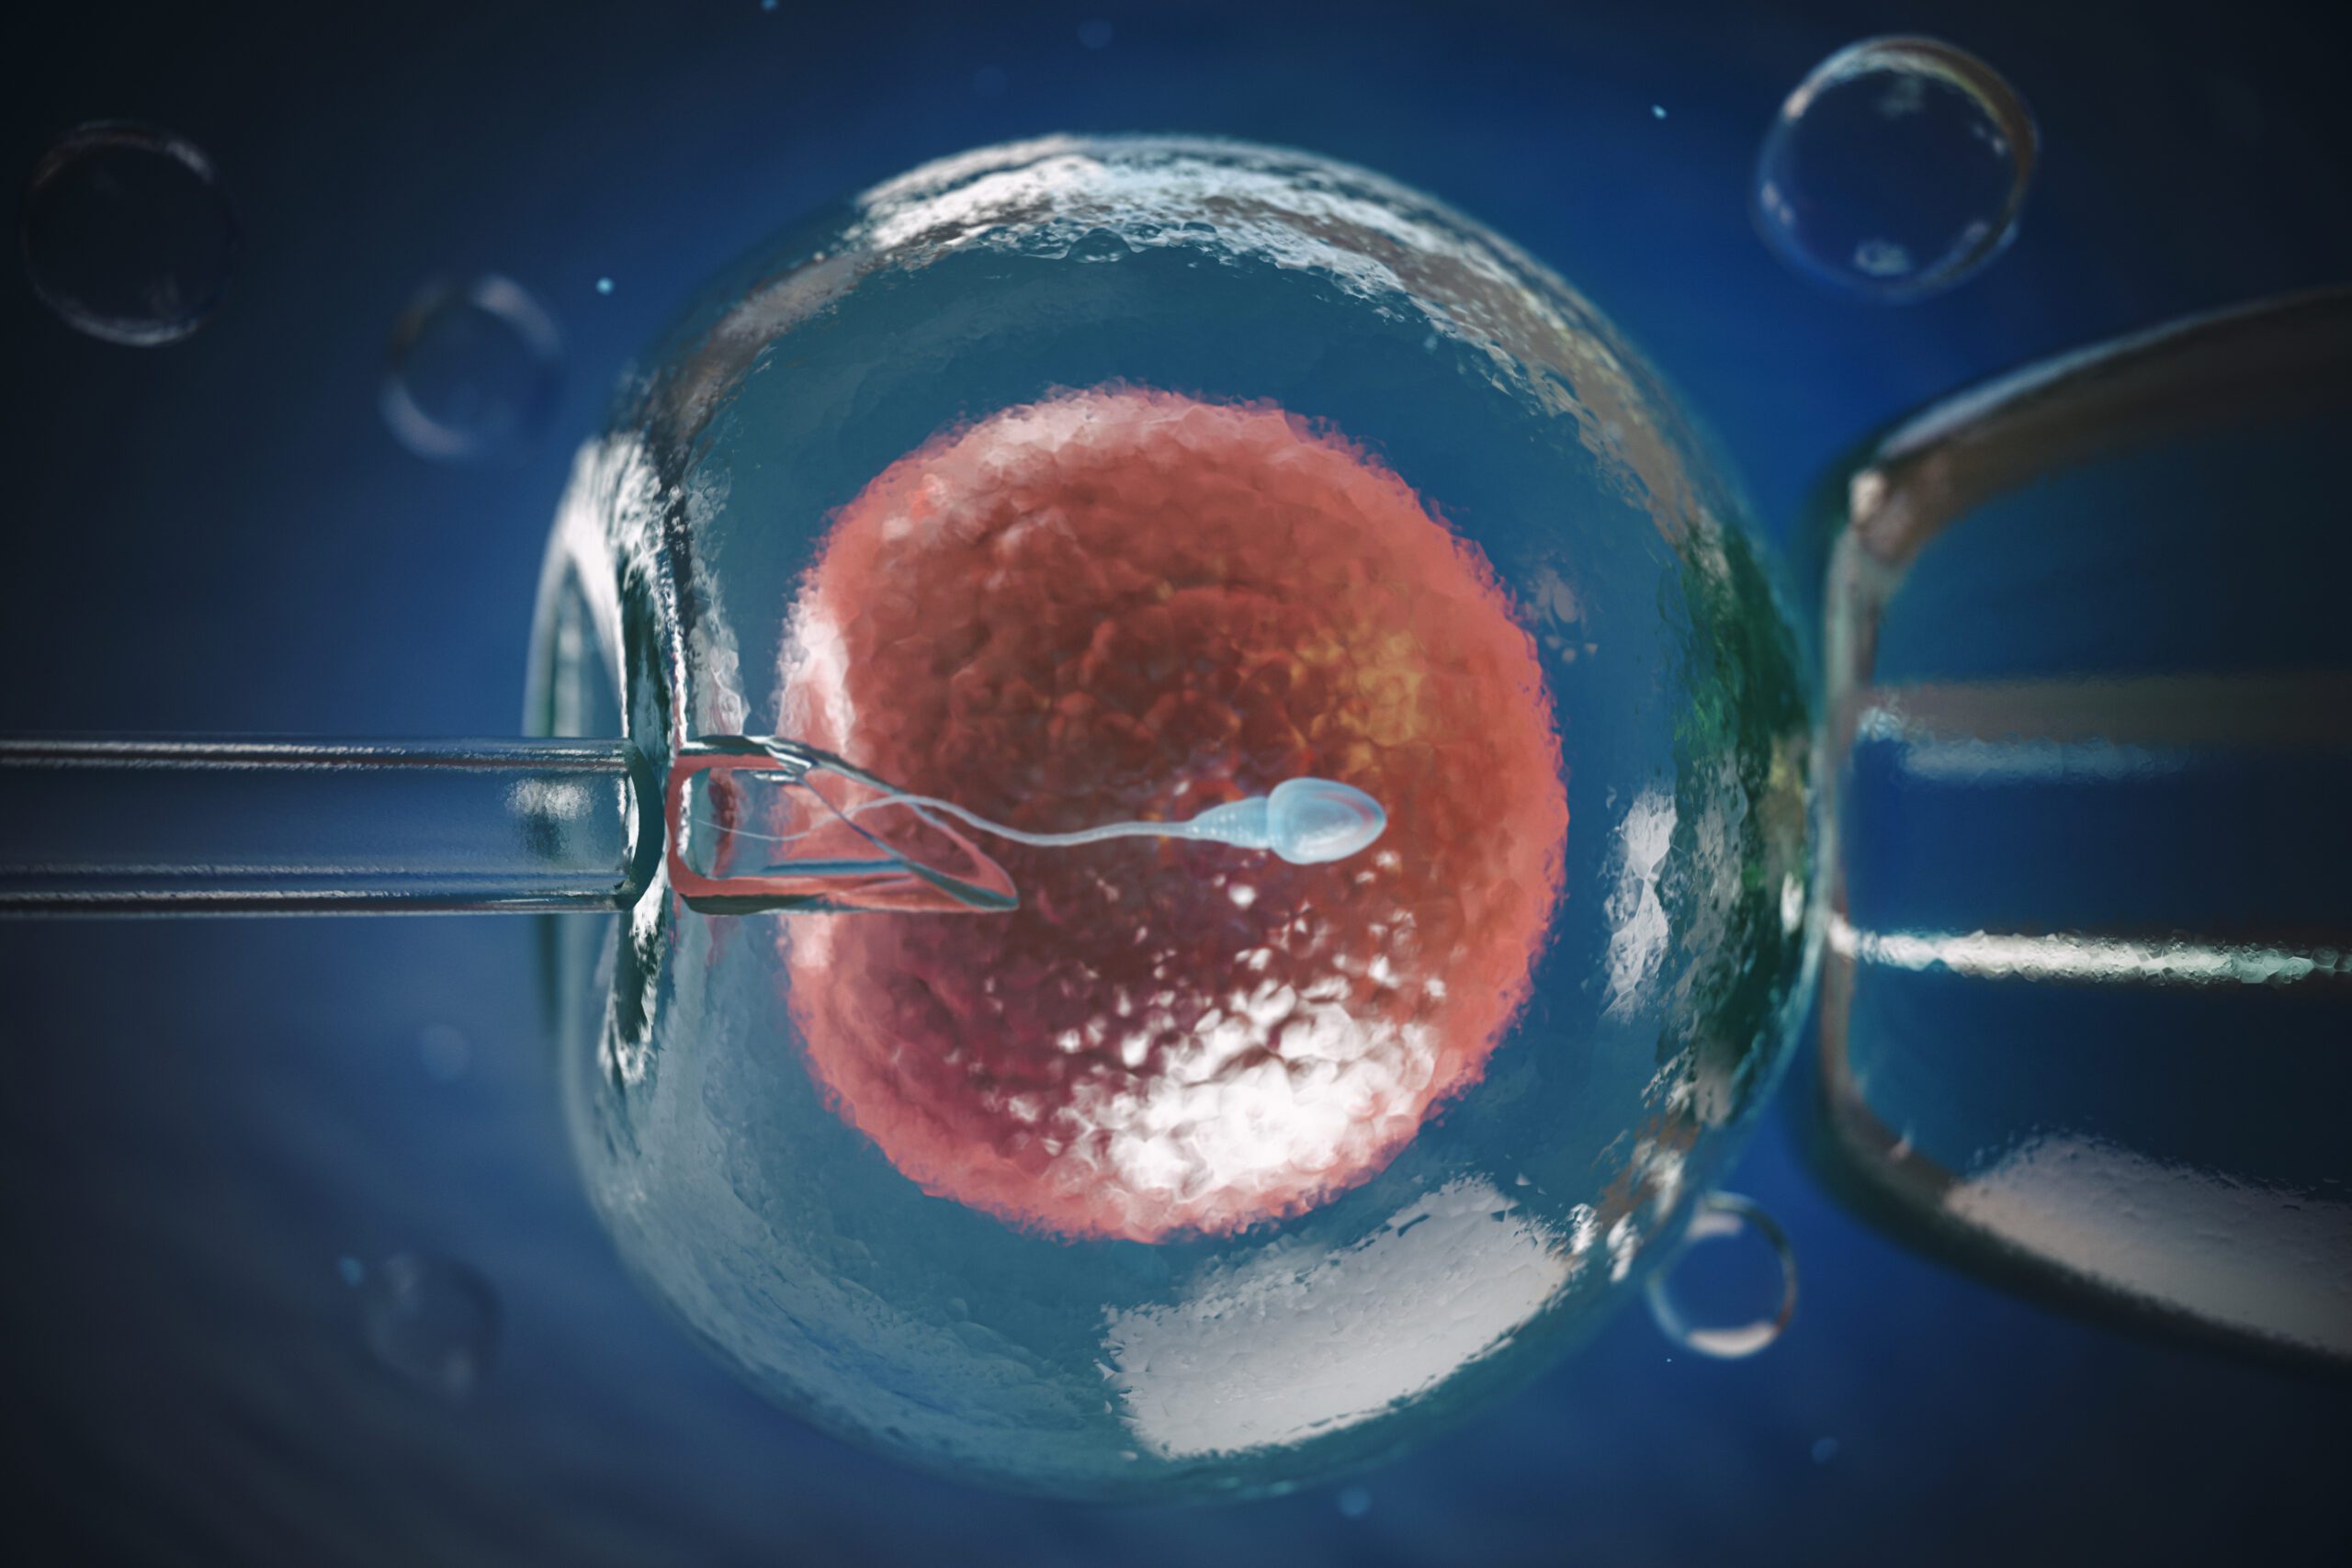 Artificial insemination, in vitro fertilization IVF of human egg cell or fertility treatment. 3d illustration